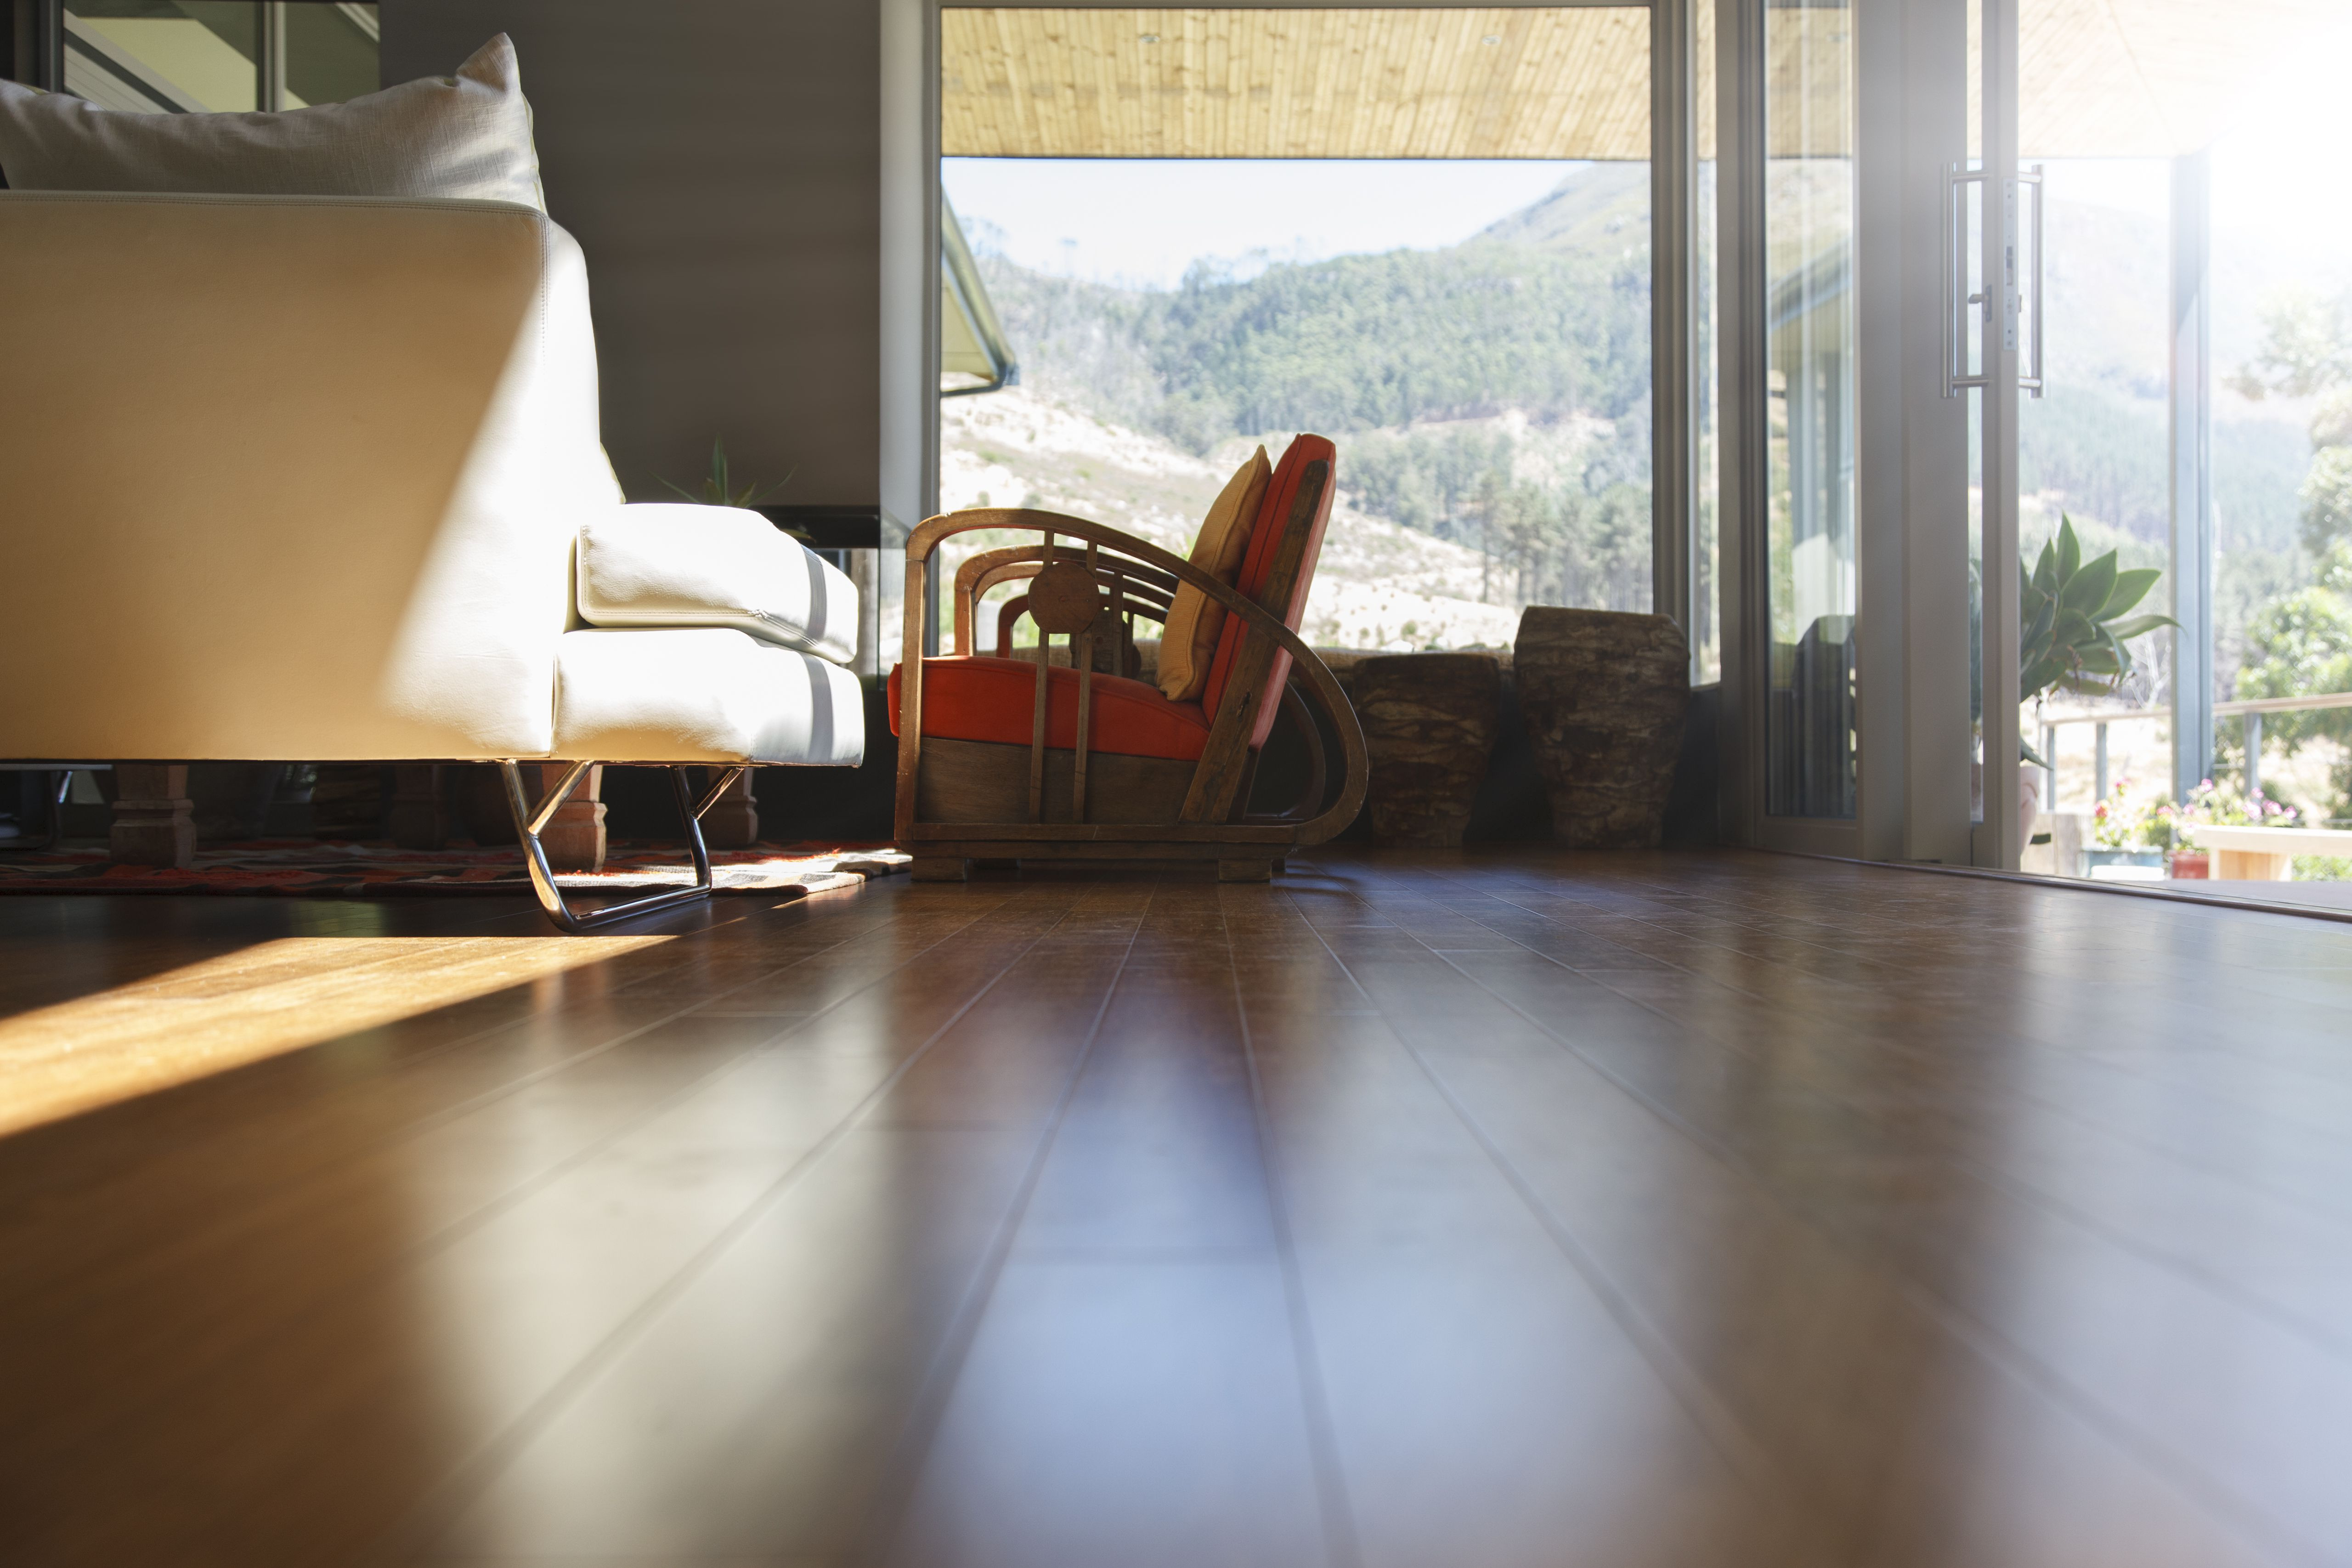 17 Stylish Sanding Hardwood Floors Video 2024 free download sanding hardwood floors video of a vinyl plank flooring guide inside living room interior hard wood floor and sofa 525439899 57e95e215f9b586c359d5ab1